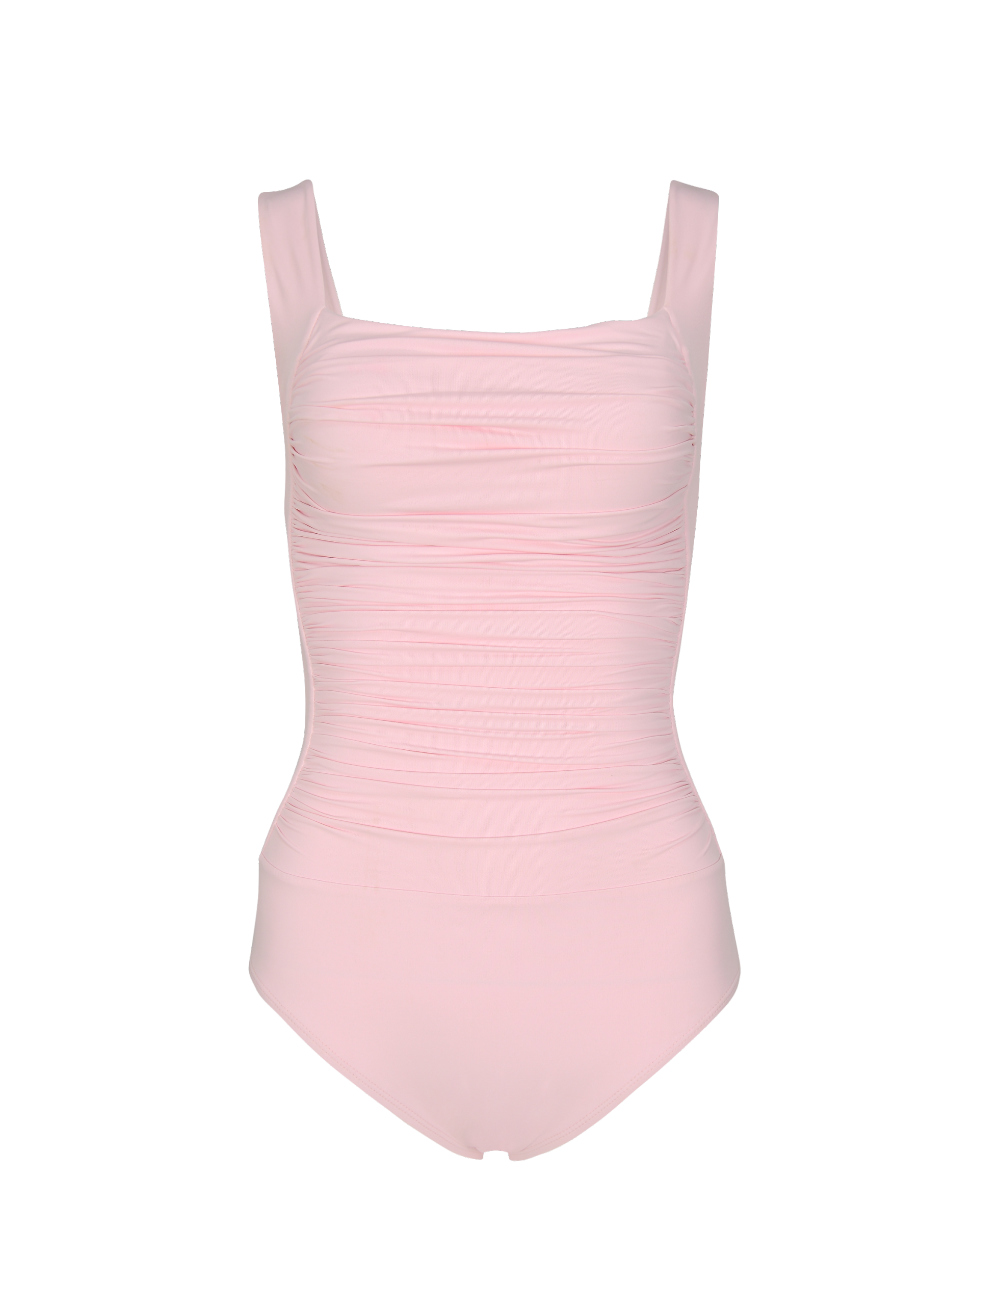 dress baby pink color image-S1L54